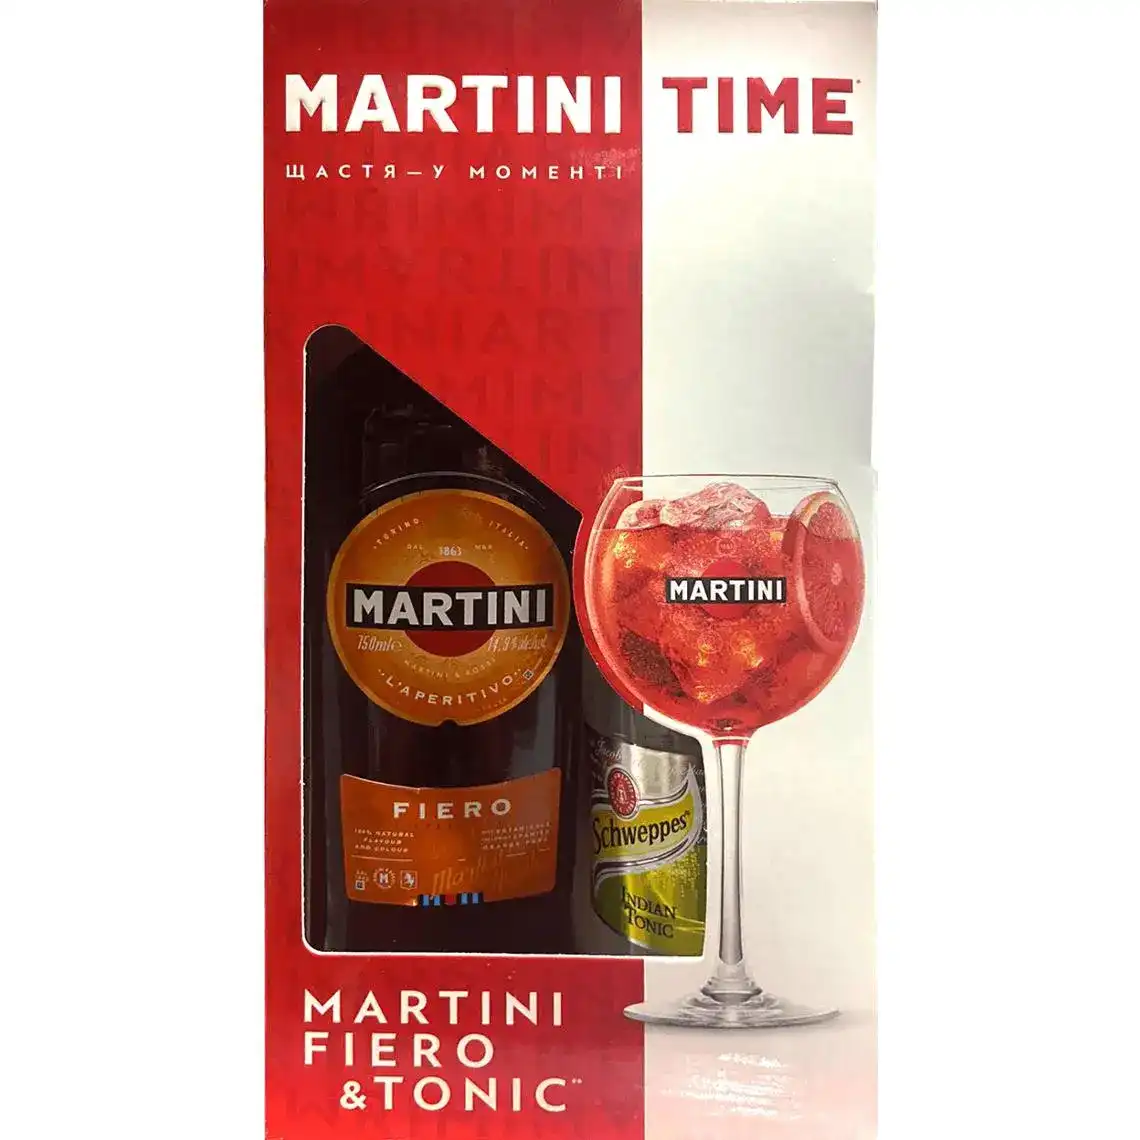 Фото 1 - Вермут Martini Fiero 14.9% 0.75 л + Тонік Schweppes 1 л